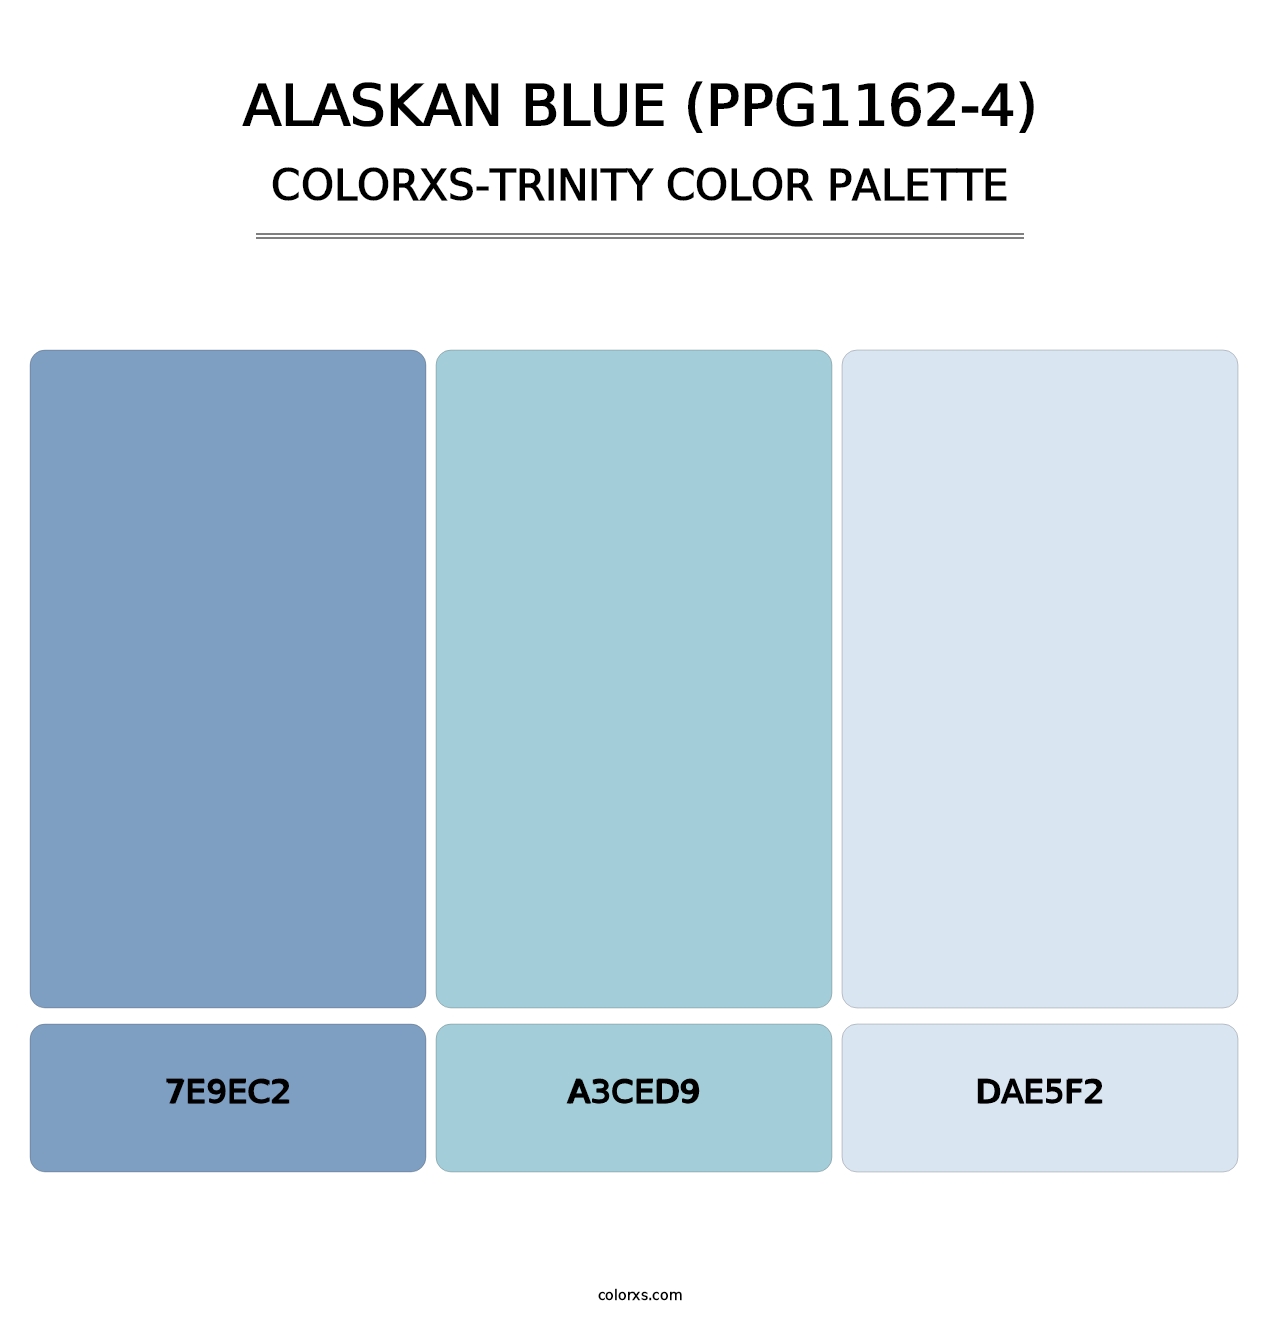 Alaskan Blue (PPG1162-4) - Colorxs Trinity Palette